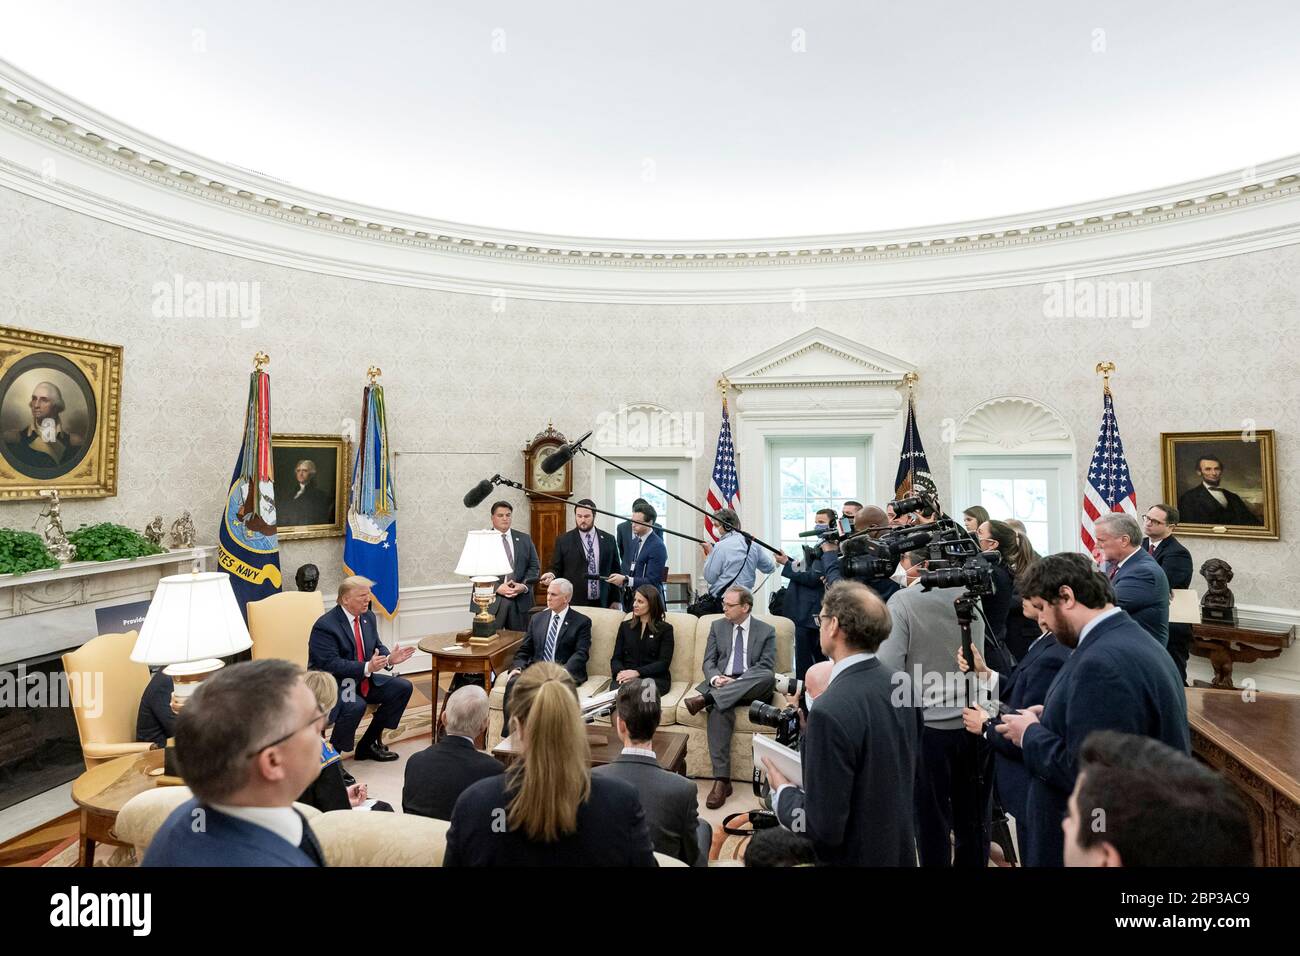 US-Präsident Donald Trump trifft sich mit Louisiana Gov. John Bel Edwards diskutiert die COVID-19, die Coronavirus-Pandemie im Oval Office des Weißen Hauses am 29. April 2020 in Washington, D.C. Stockfoto